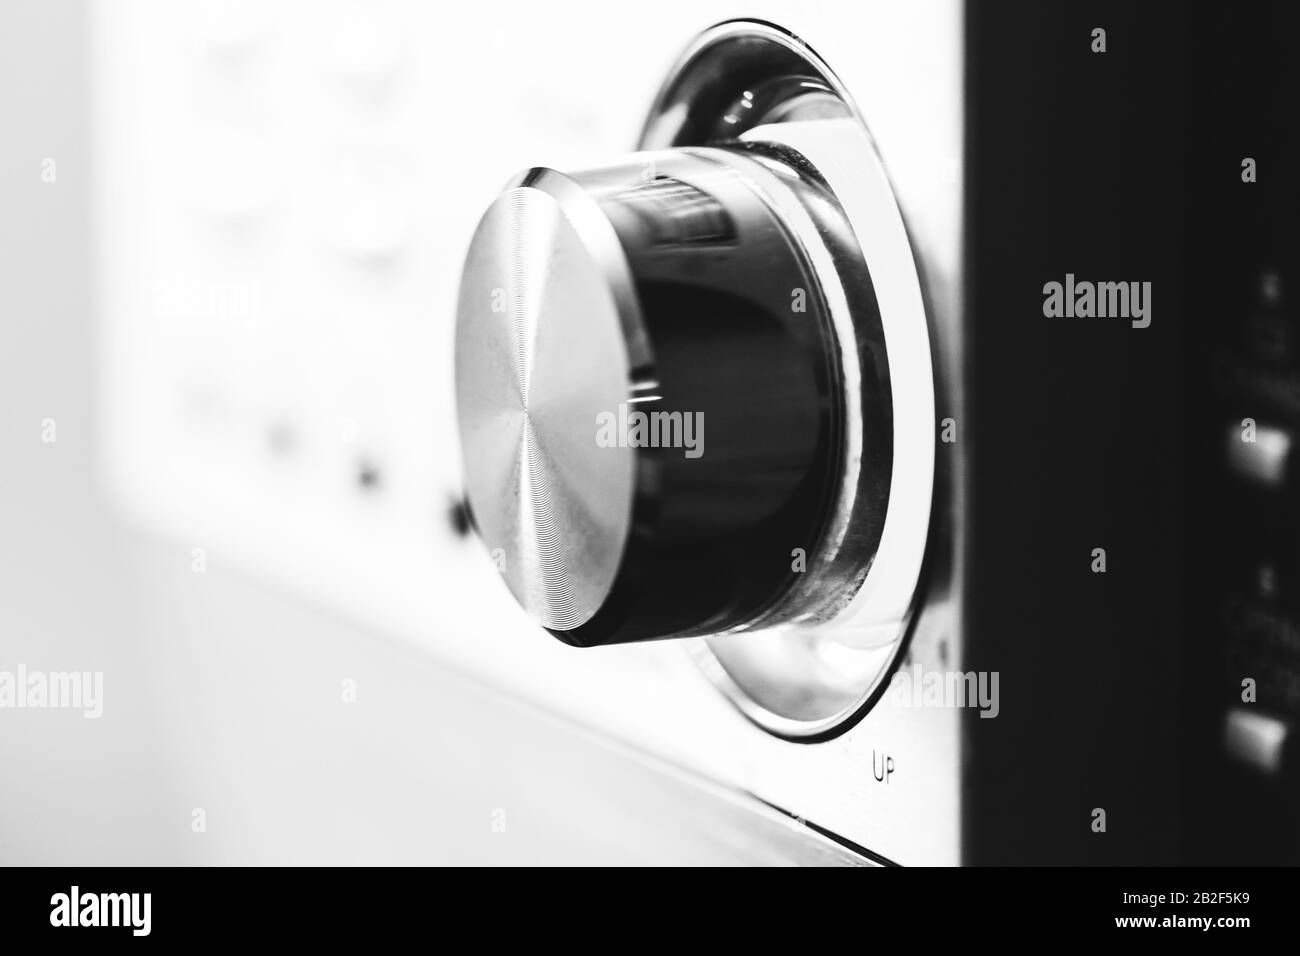 Shiny metallic volume control knob, close up black and white photo with selective soft focus Stock Photo